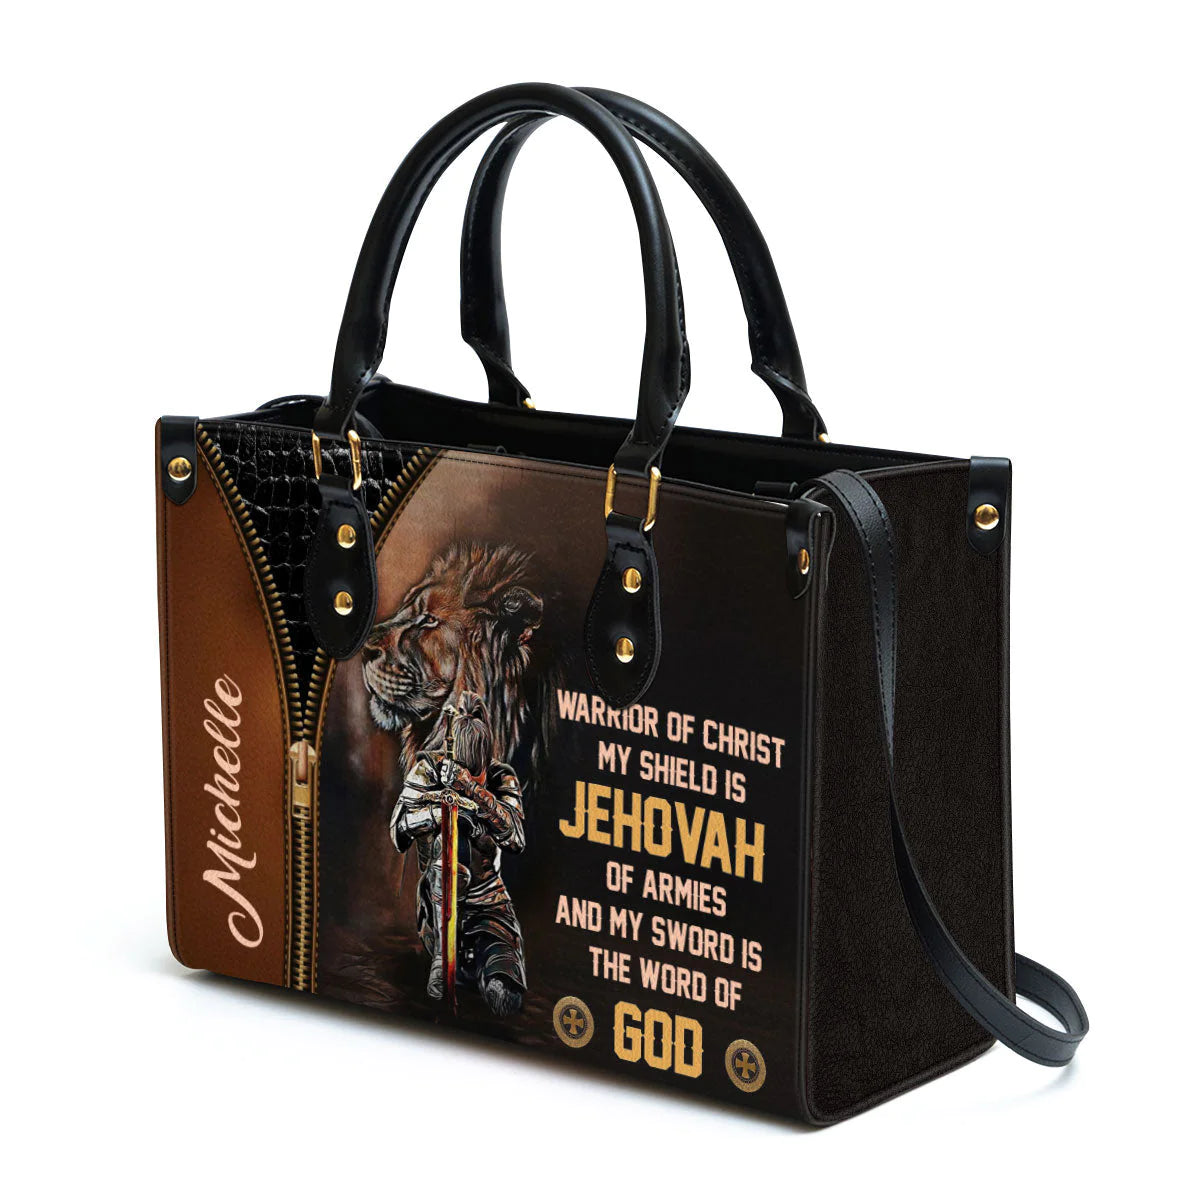 Christianartbag Handbag, Warrior Of Christ Beautiful, Personalized Gifts, Gifts for Women, Christmas Gift. - Christian Art Bag